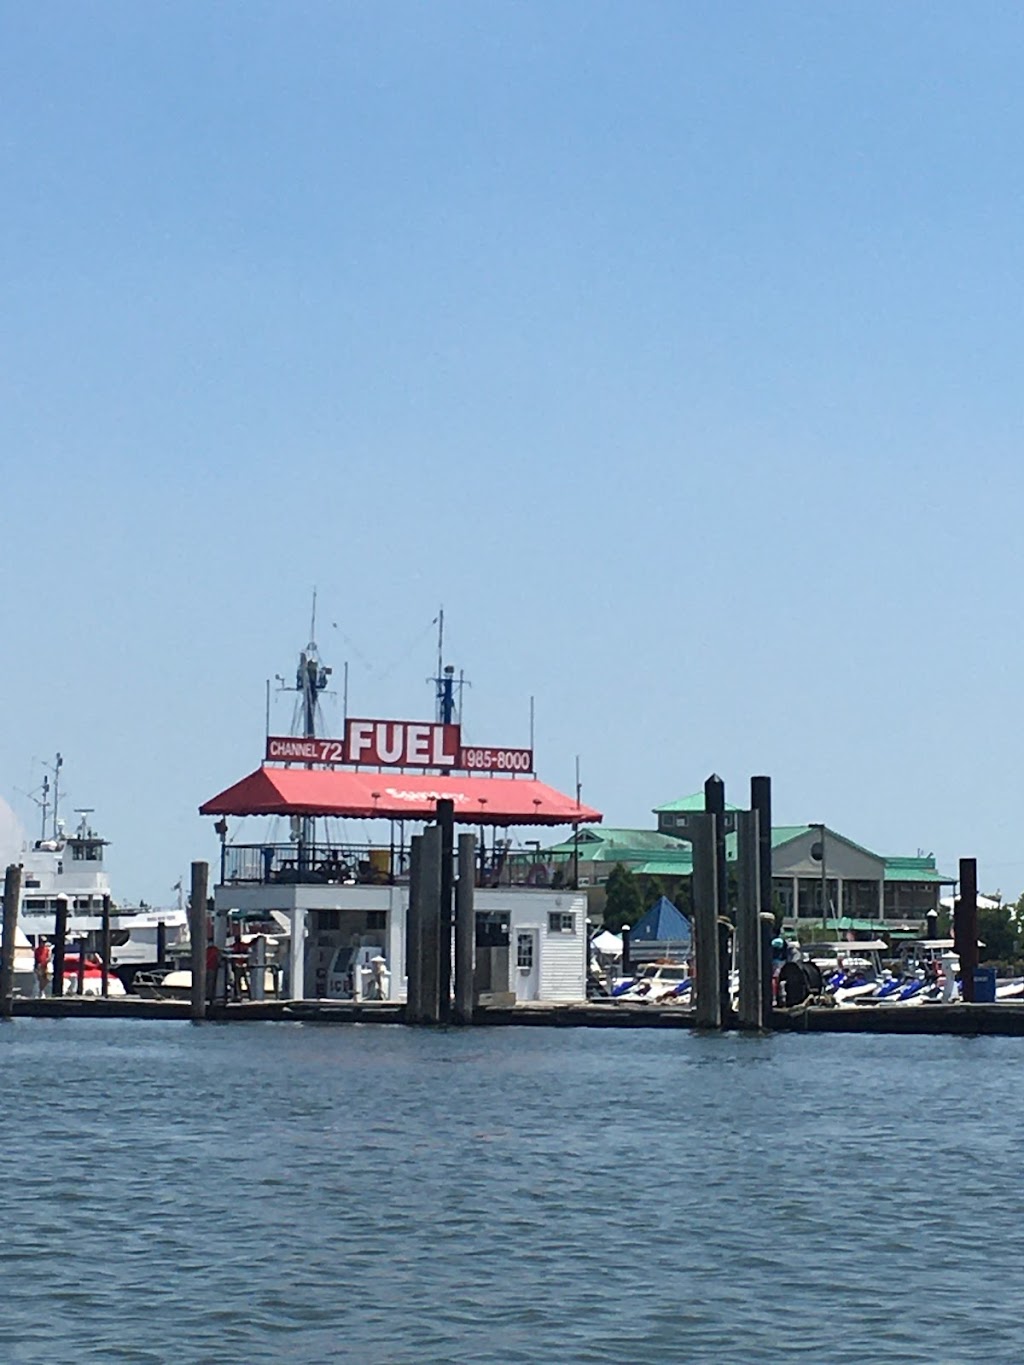 Liberty Landing Marina Fuel Dock | 80 Audrey Zapp Dr, Jersey City, NJ 07305 | Phone: (201) 985-8000